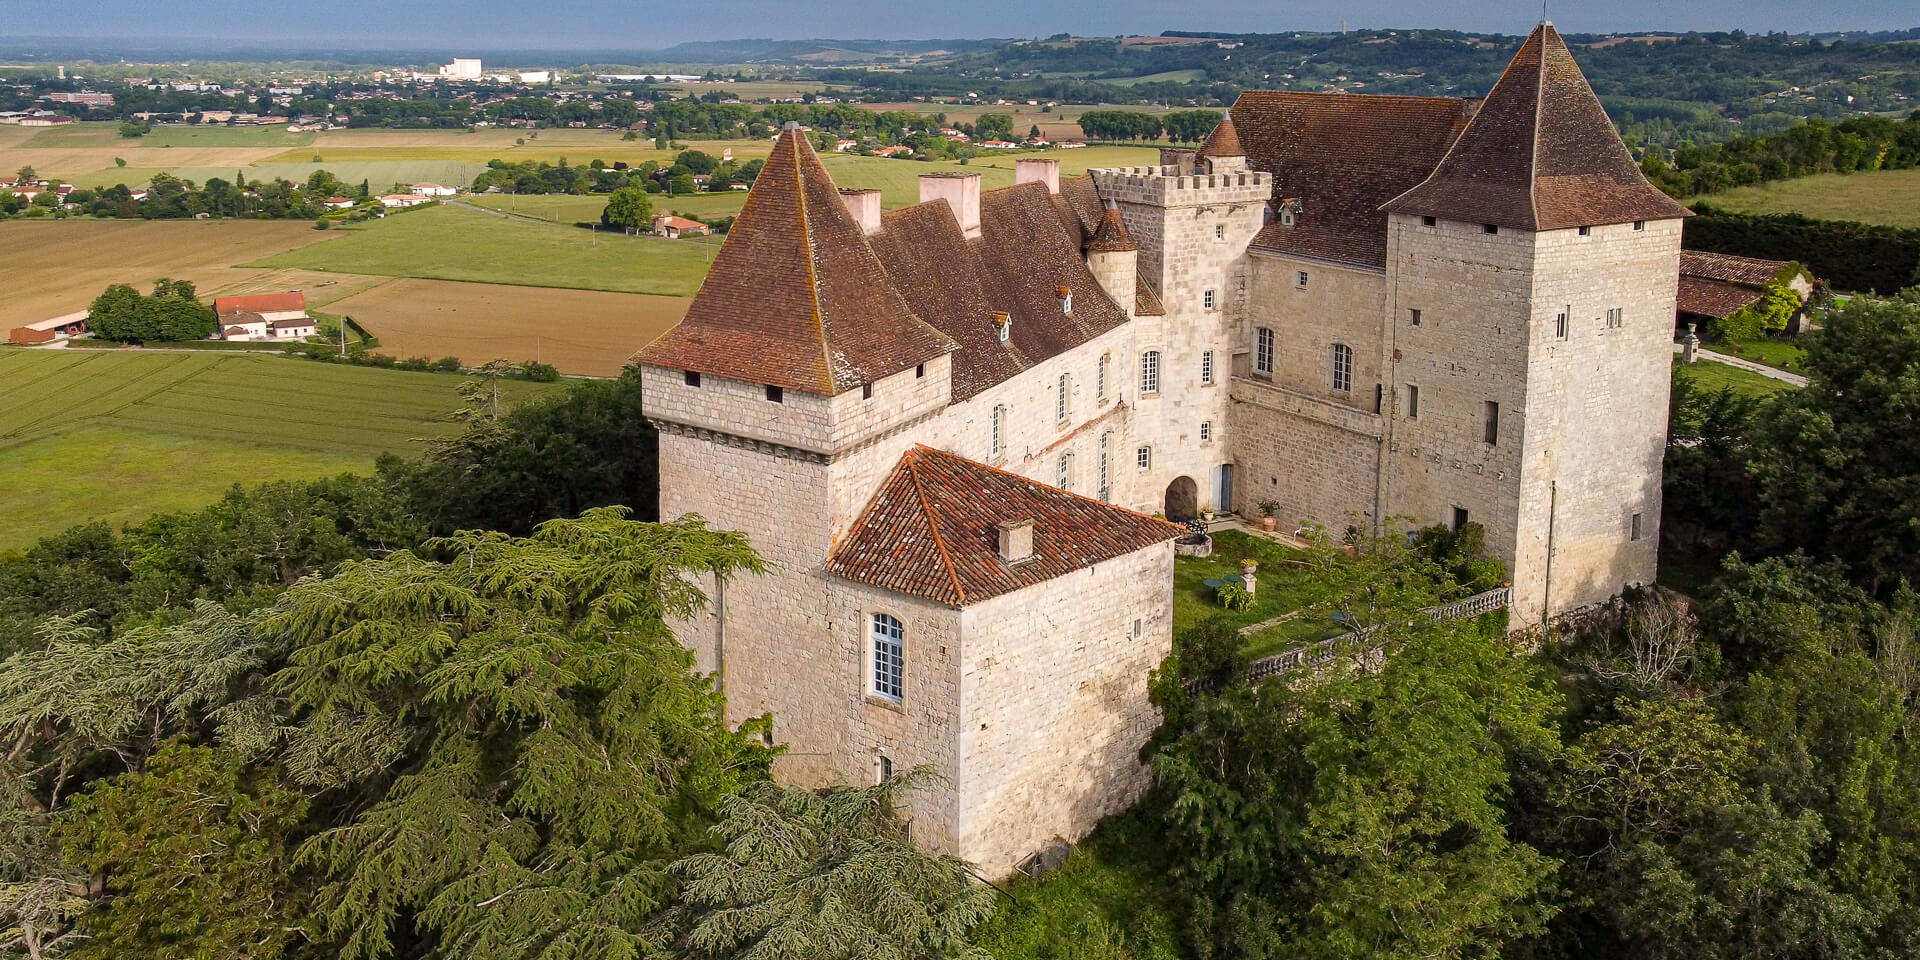 Le Château De Laze Existe T Il French chateau rental near Toulouse, for a wedding, a celebration or  vacations